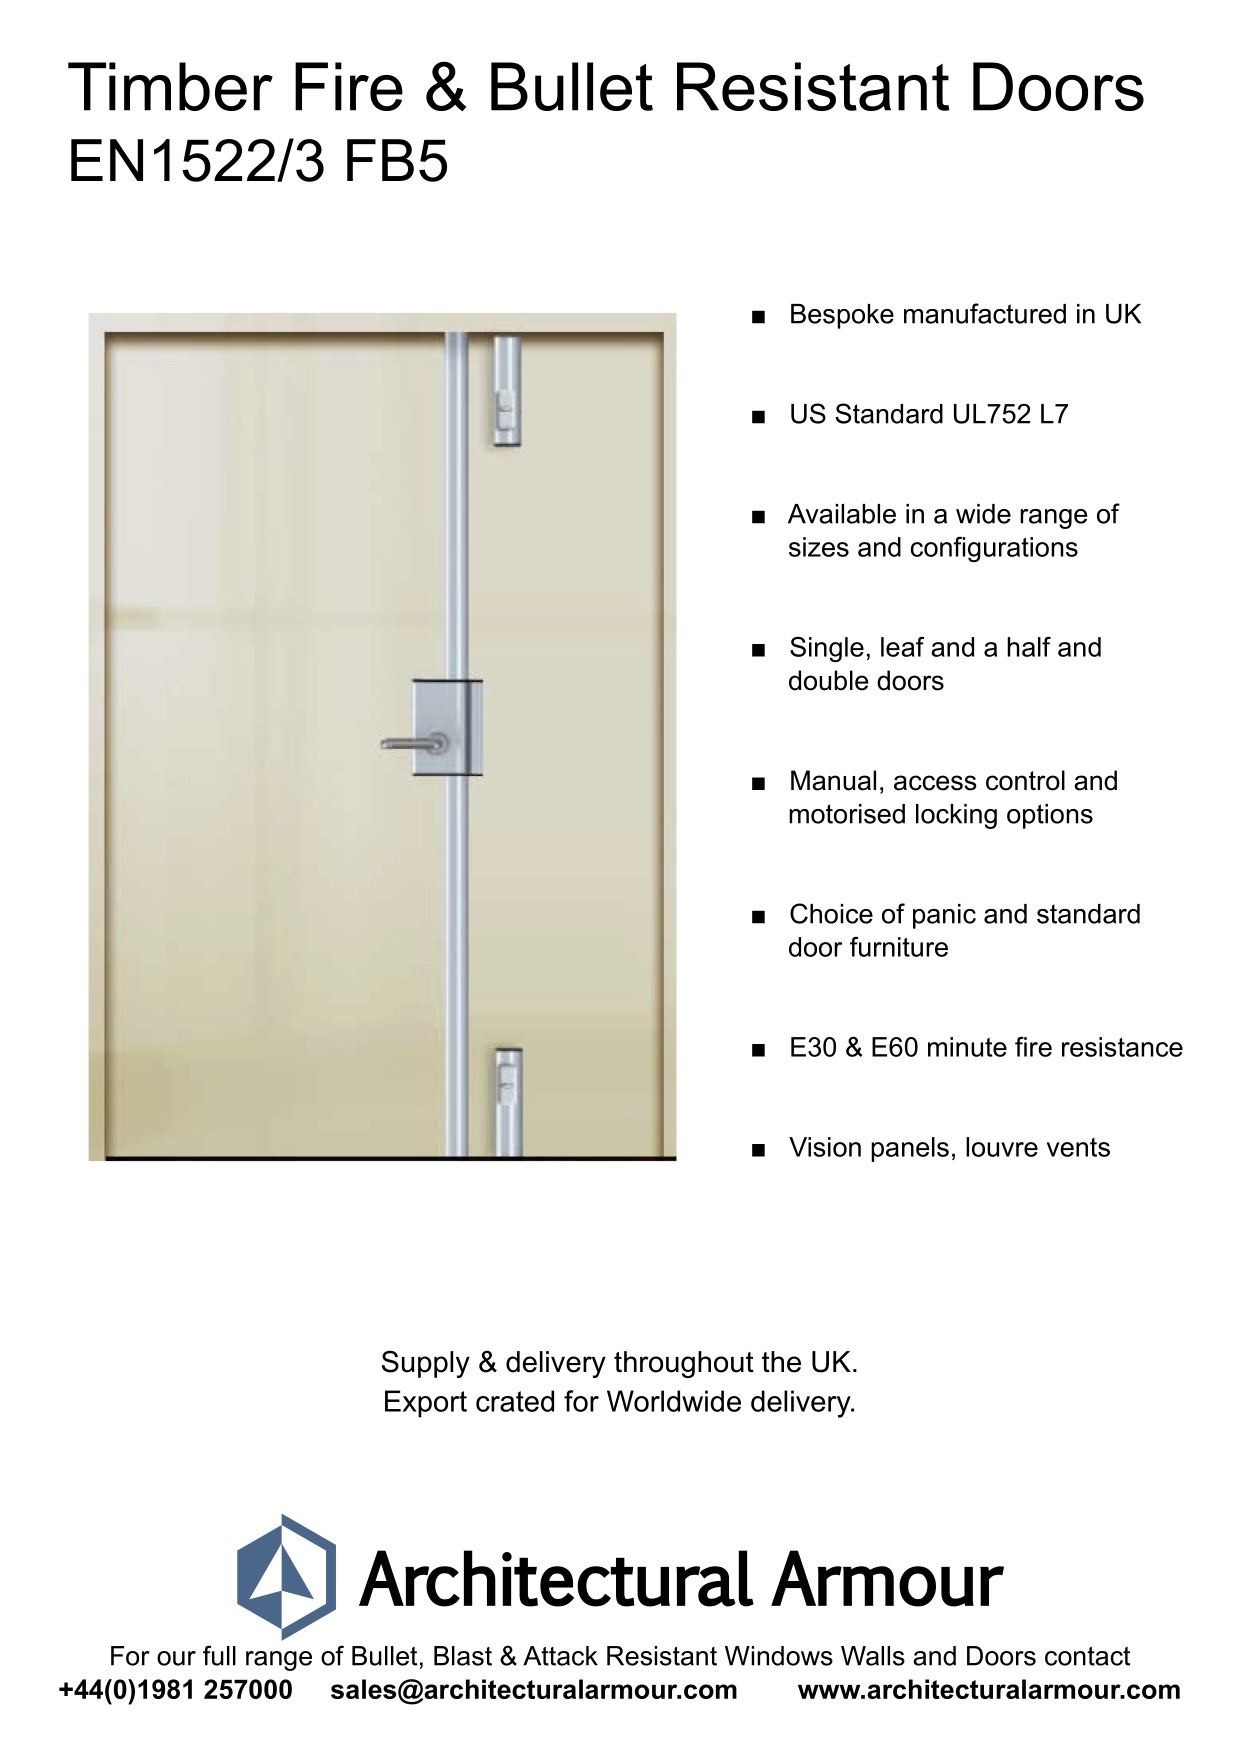 Fire-Resistant-and-Bullet-Resistant-EN1522-3-FB5-Timber-Doors